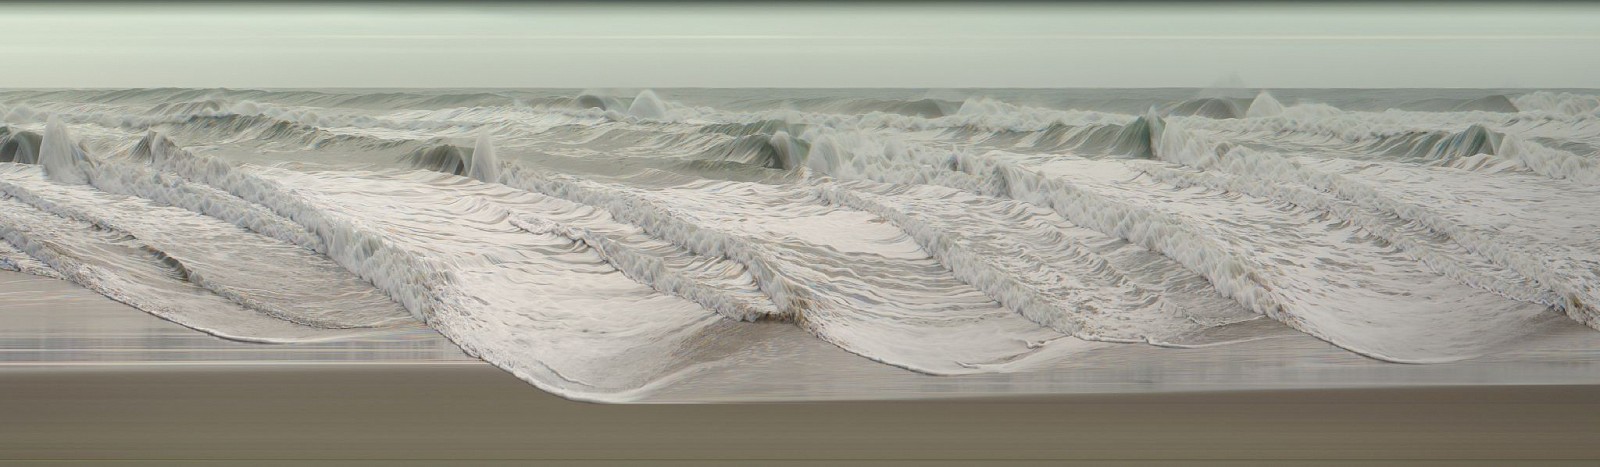 Jay Mark Johnson, STORM AT SEA #2, 2010 Malibu - Ventura CA
archival pigment on paper, mounted on aluminum, 40 x 136 in. (101.6 x 345.4 cm)